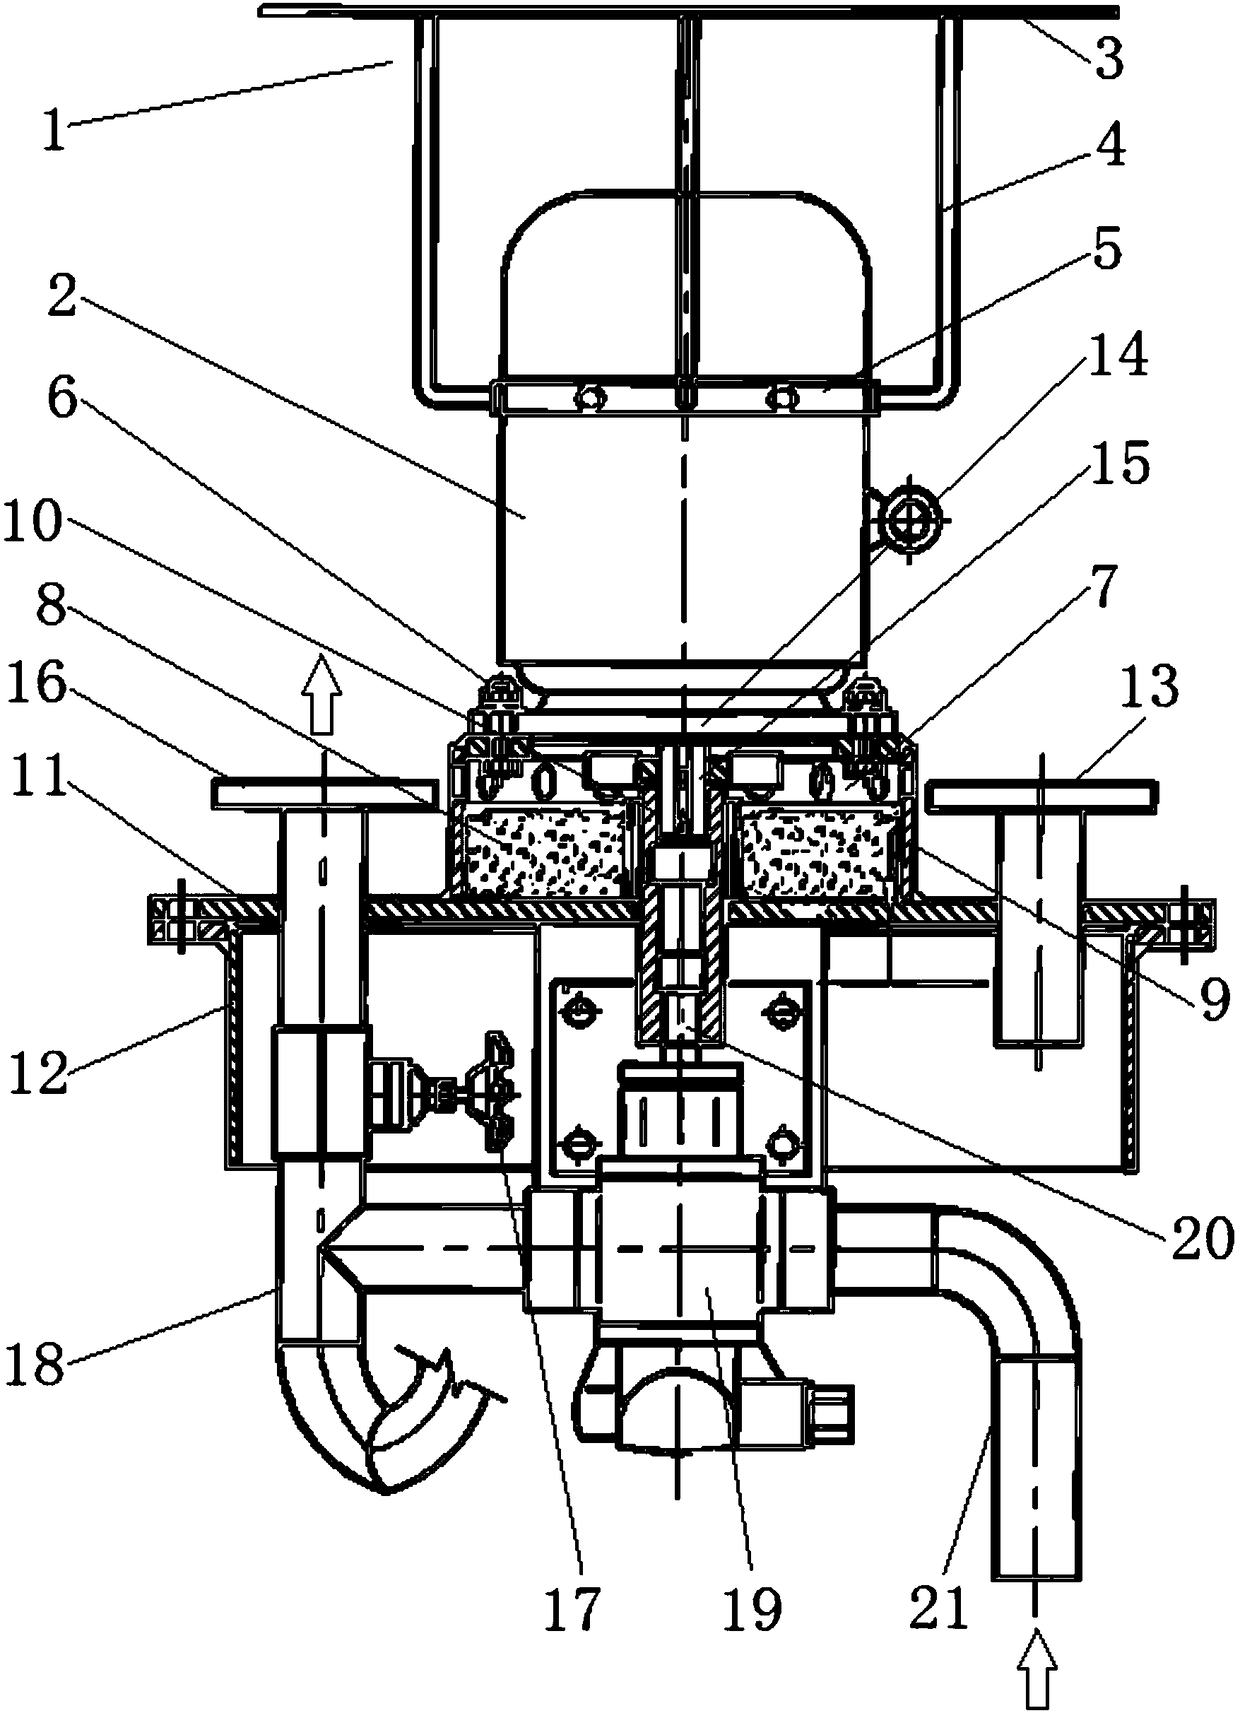 Self-heating overhead in-tank pump valve system